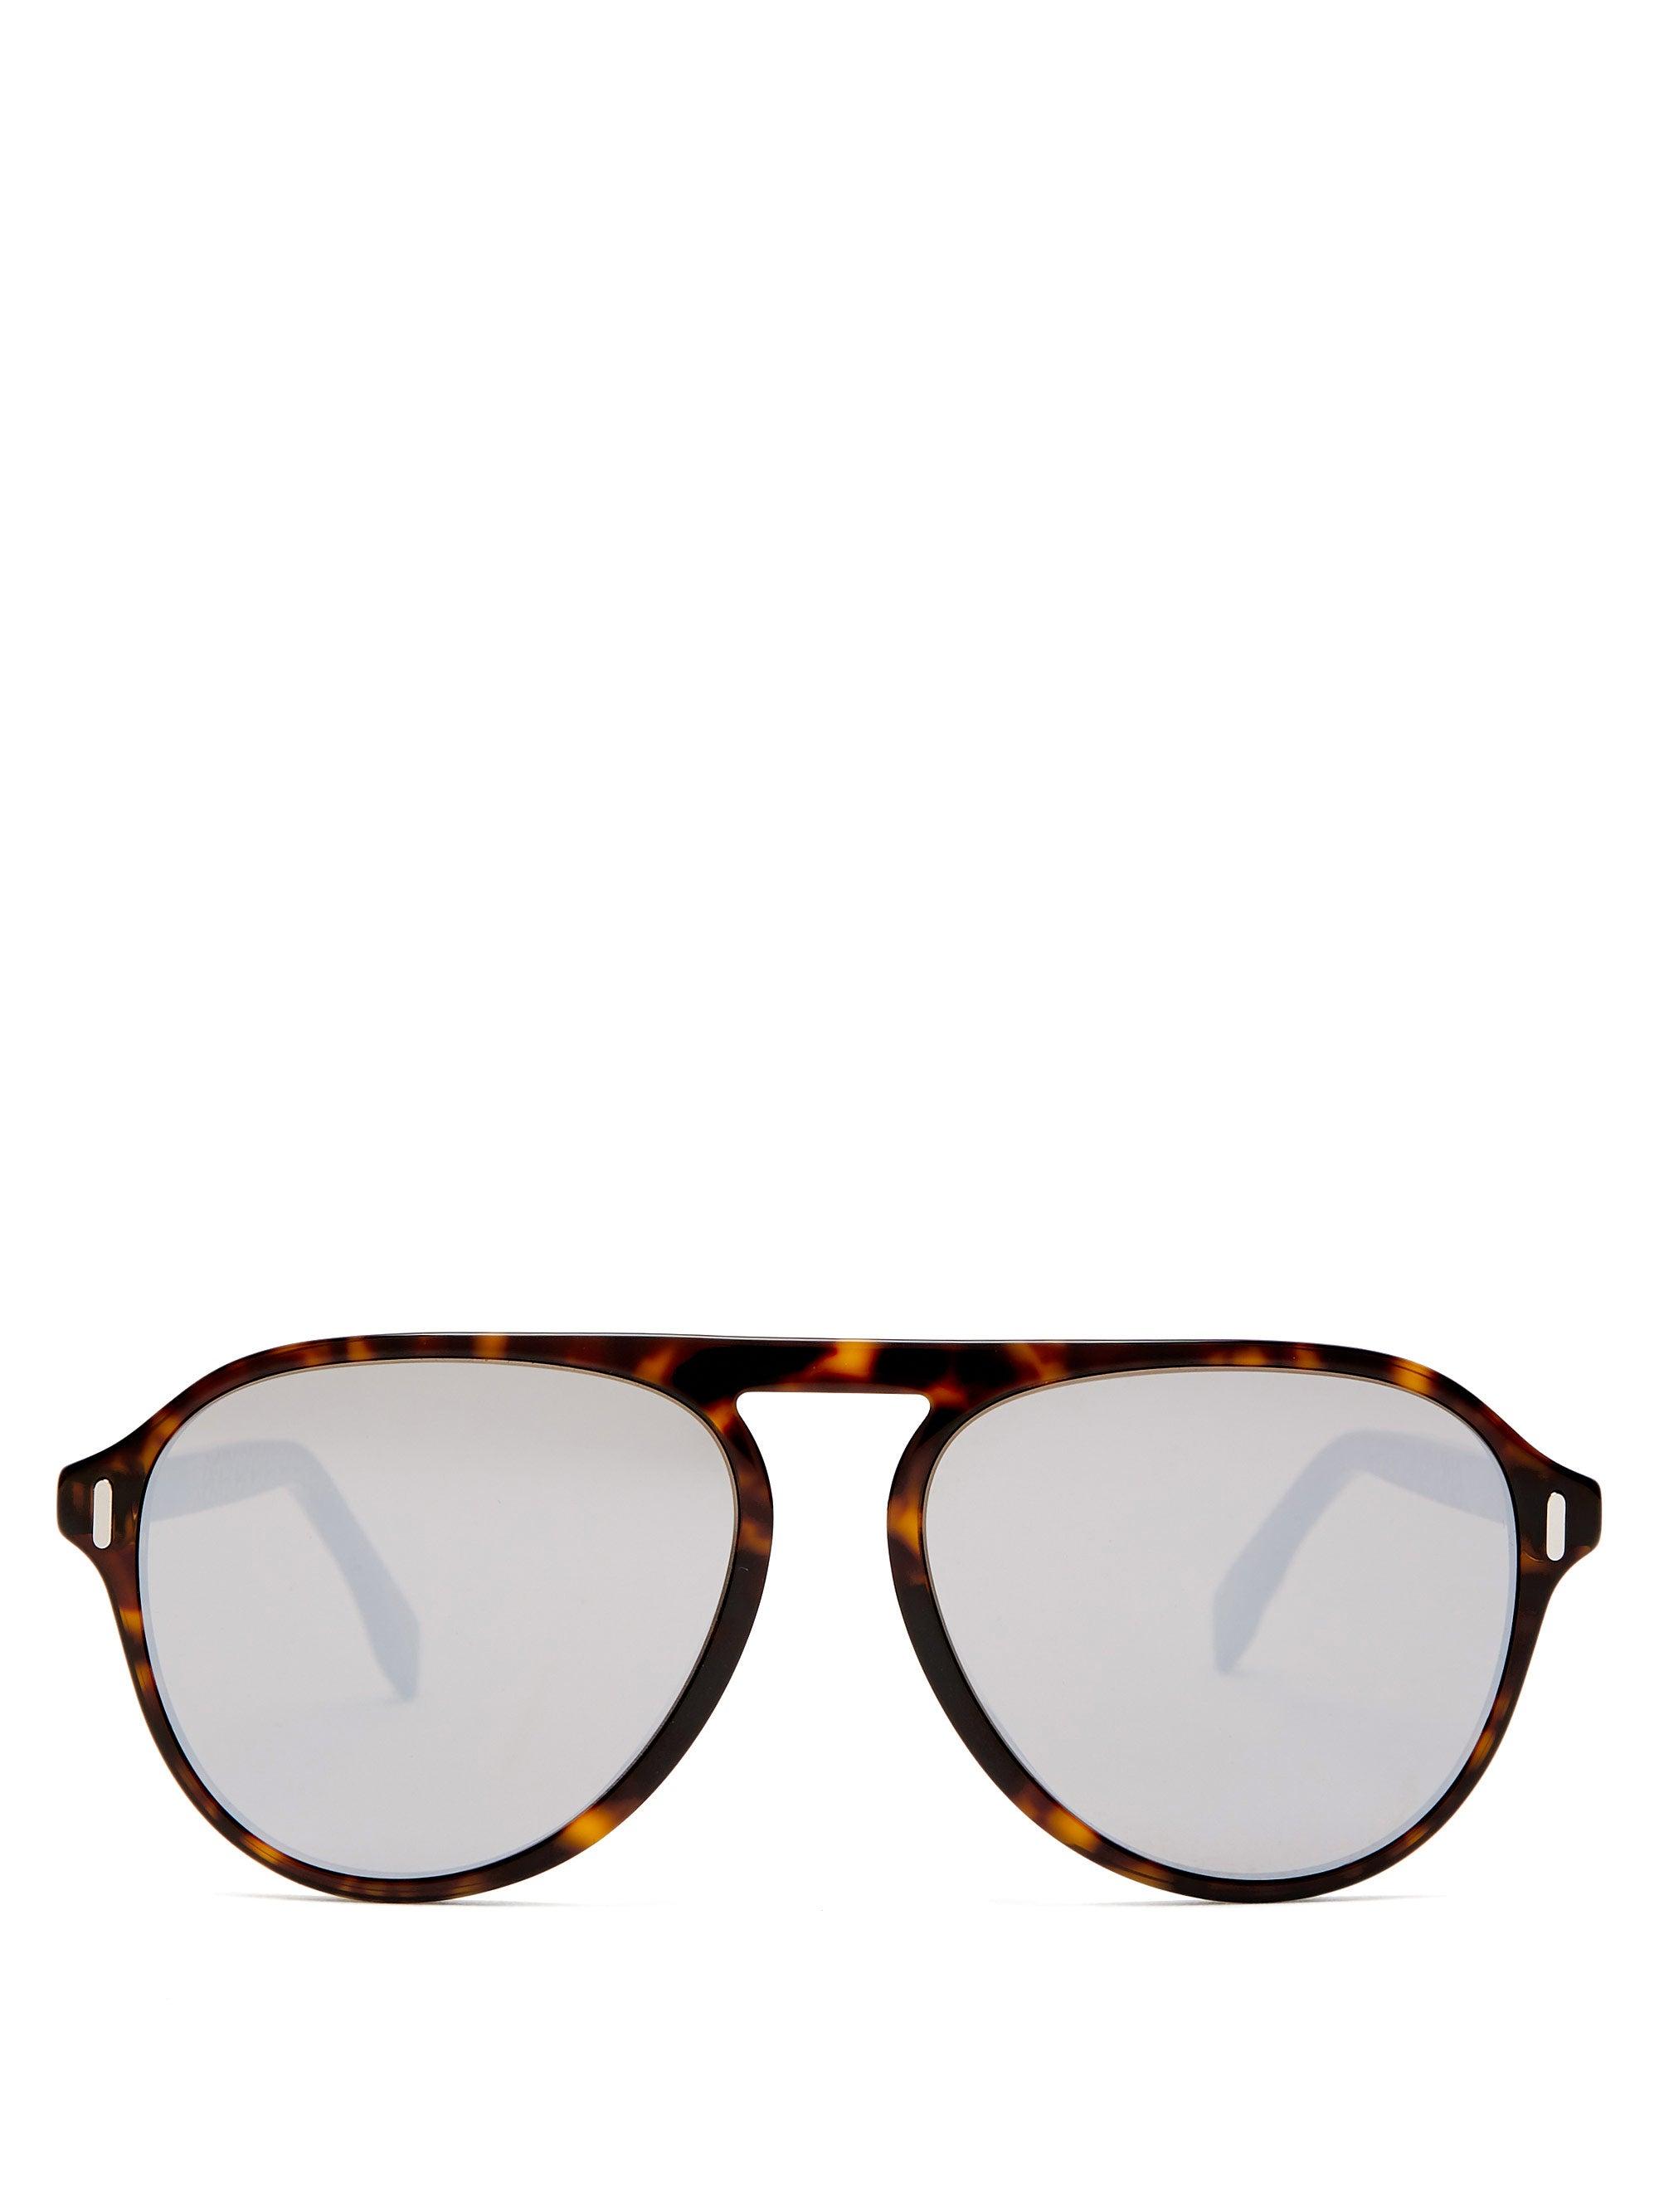 Fendi Mirrored Tortoiseshell-acetate Aviator Sunglasses for Men - Lyst